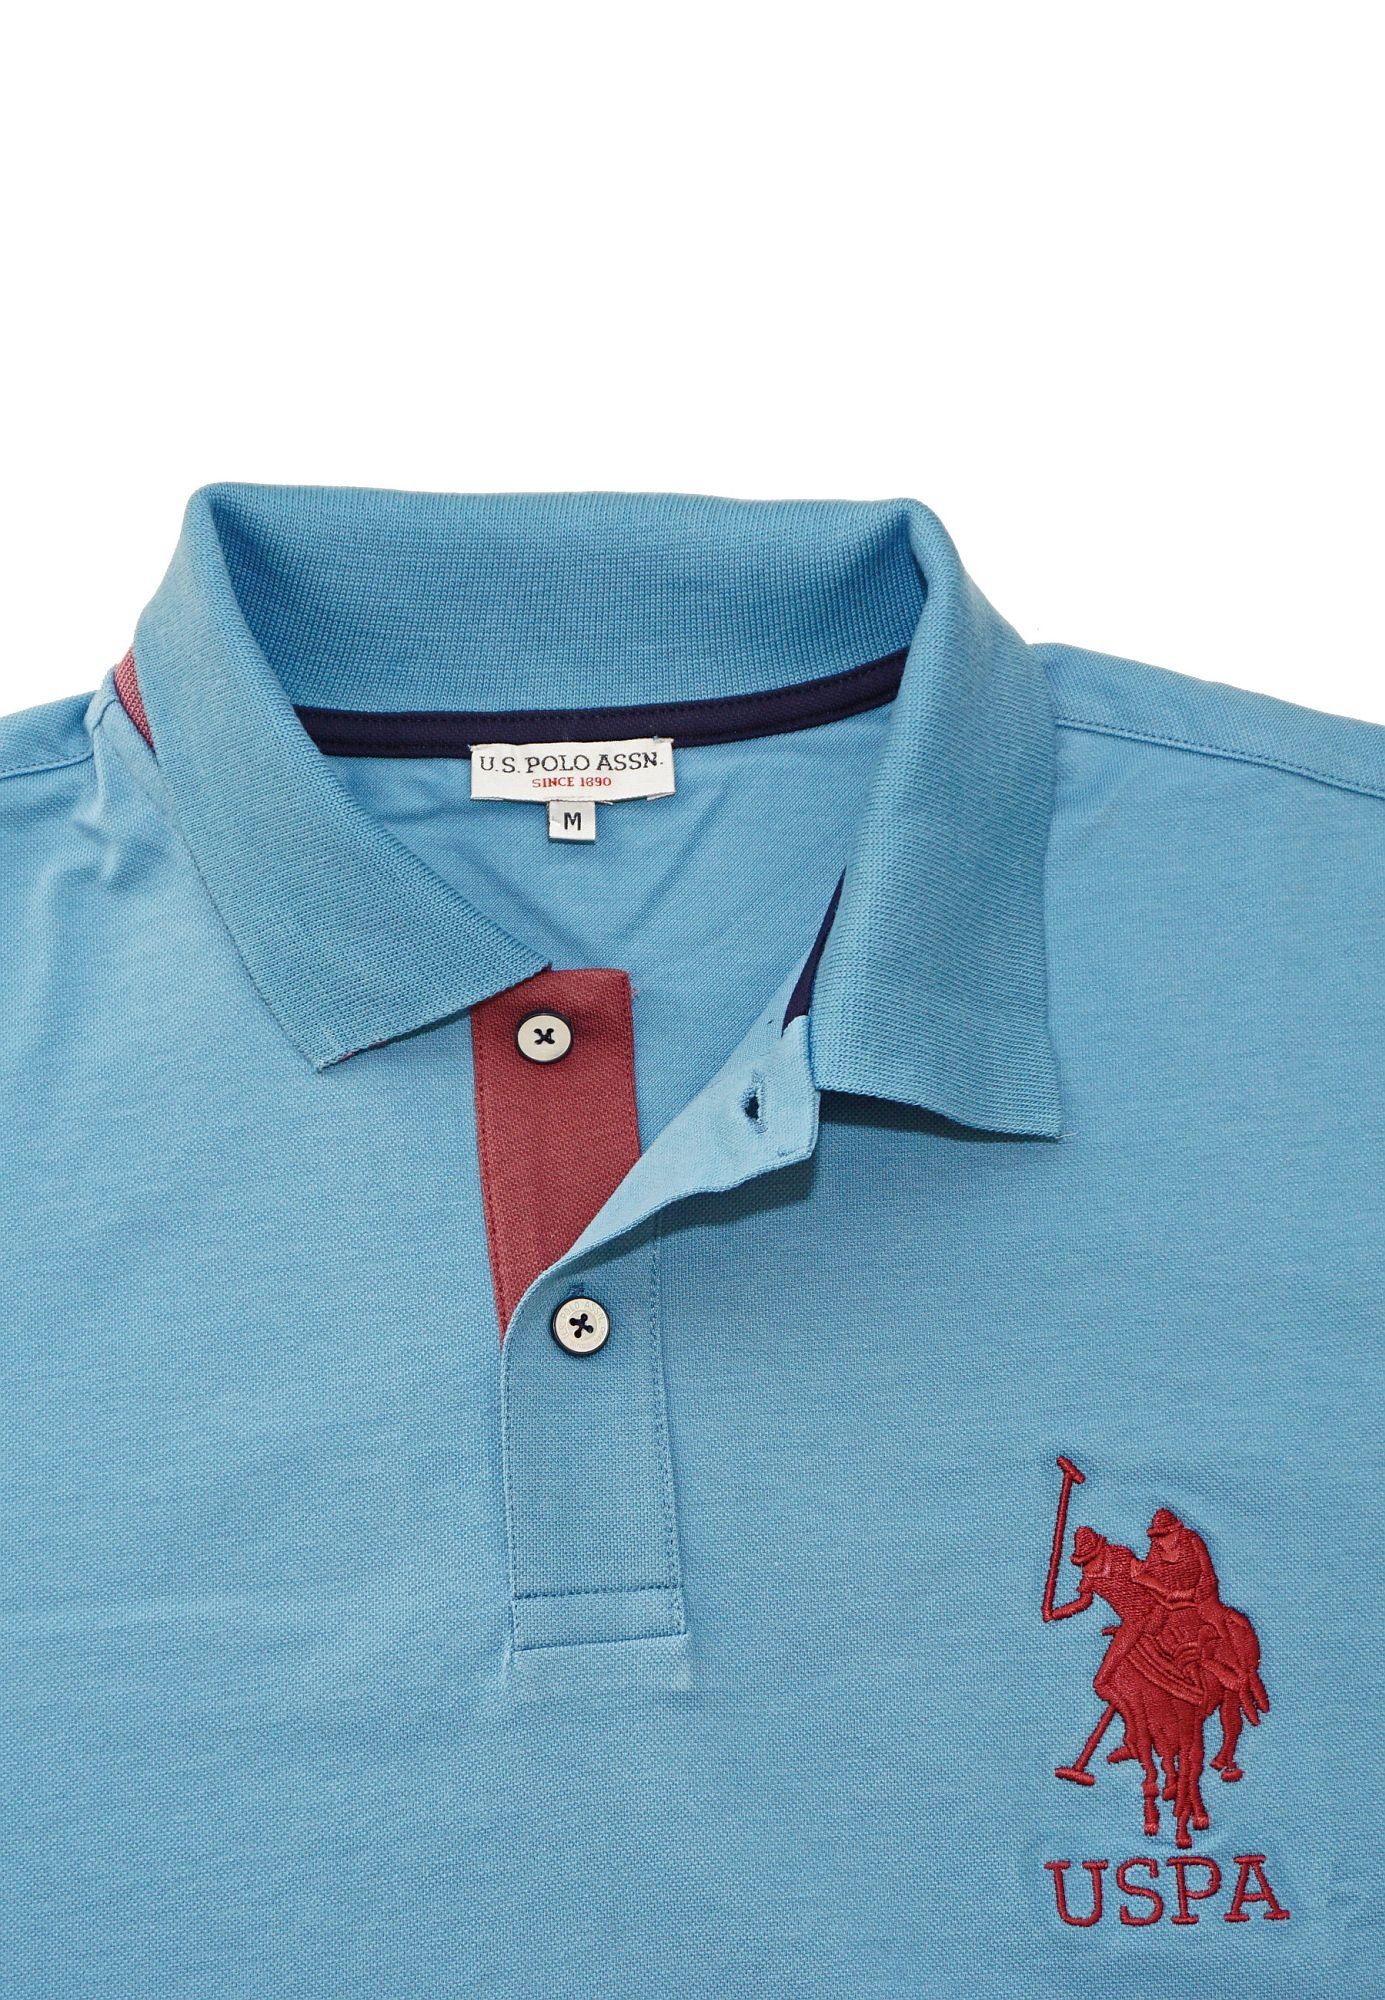 U.S. Polo Assn Poloshirt Shirt Polohemd Poloshirt Kory hellblau